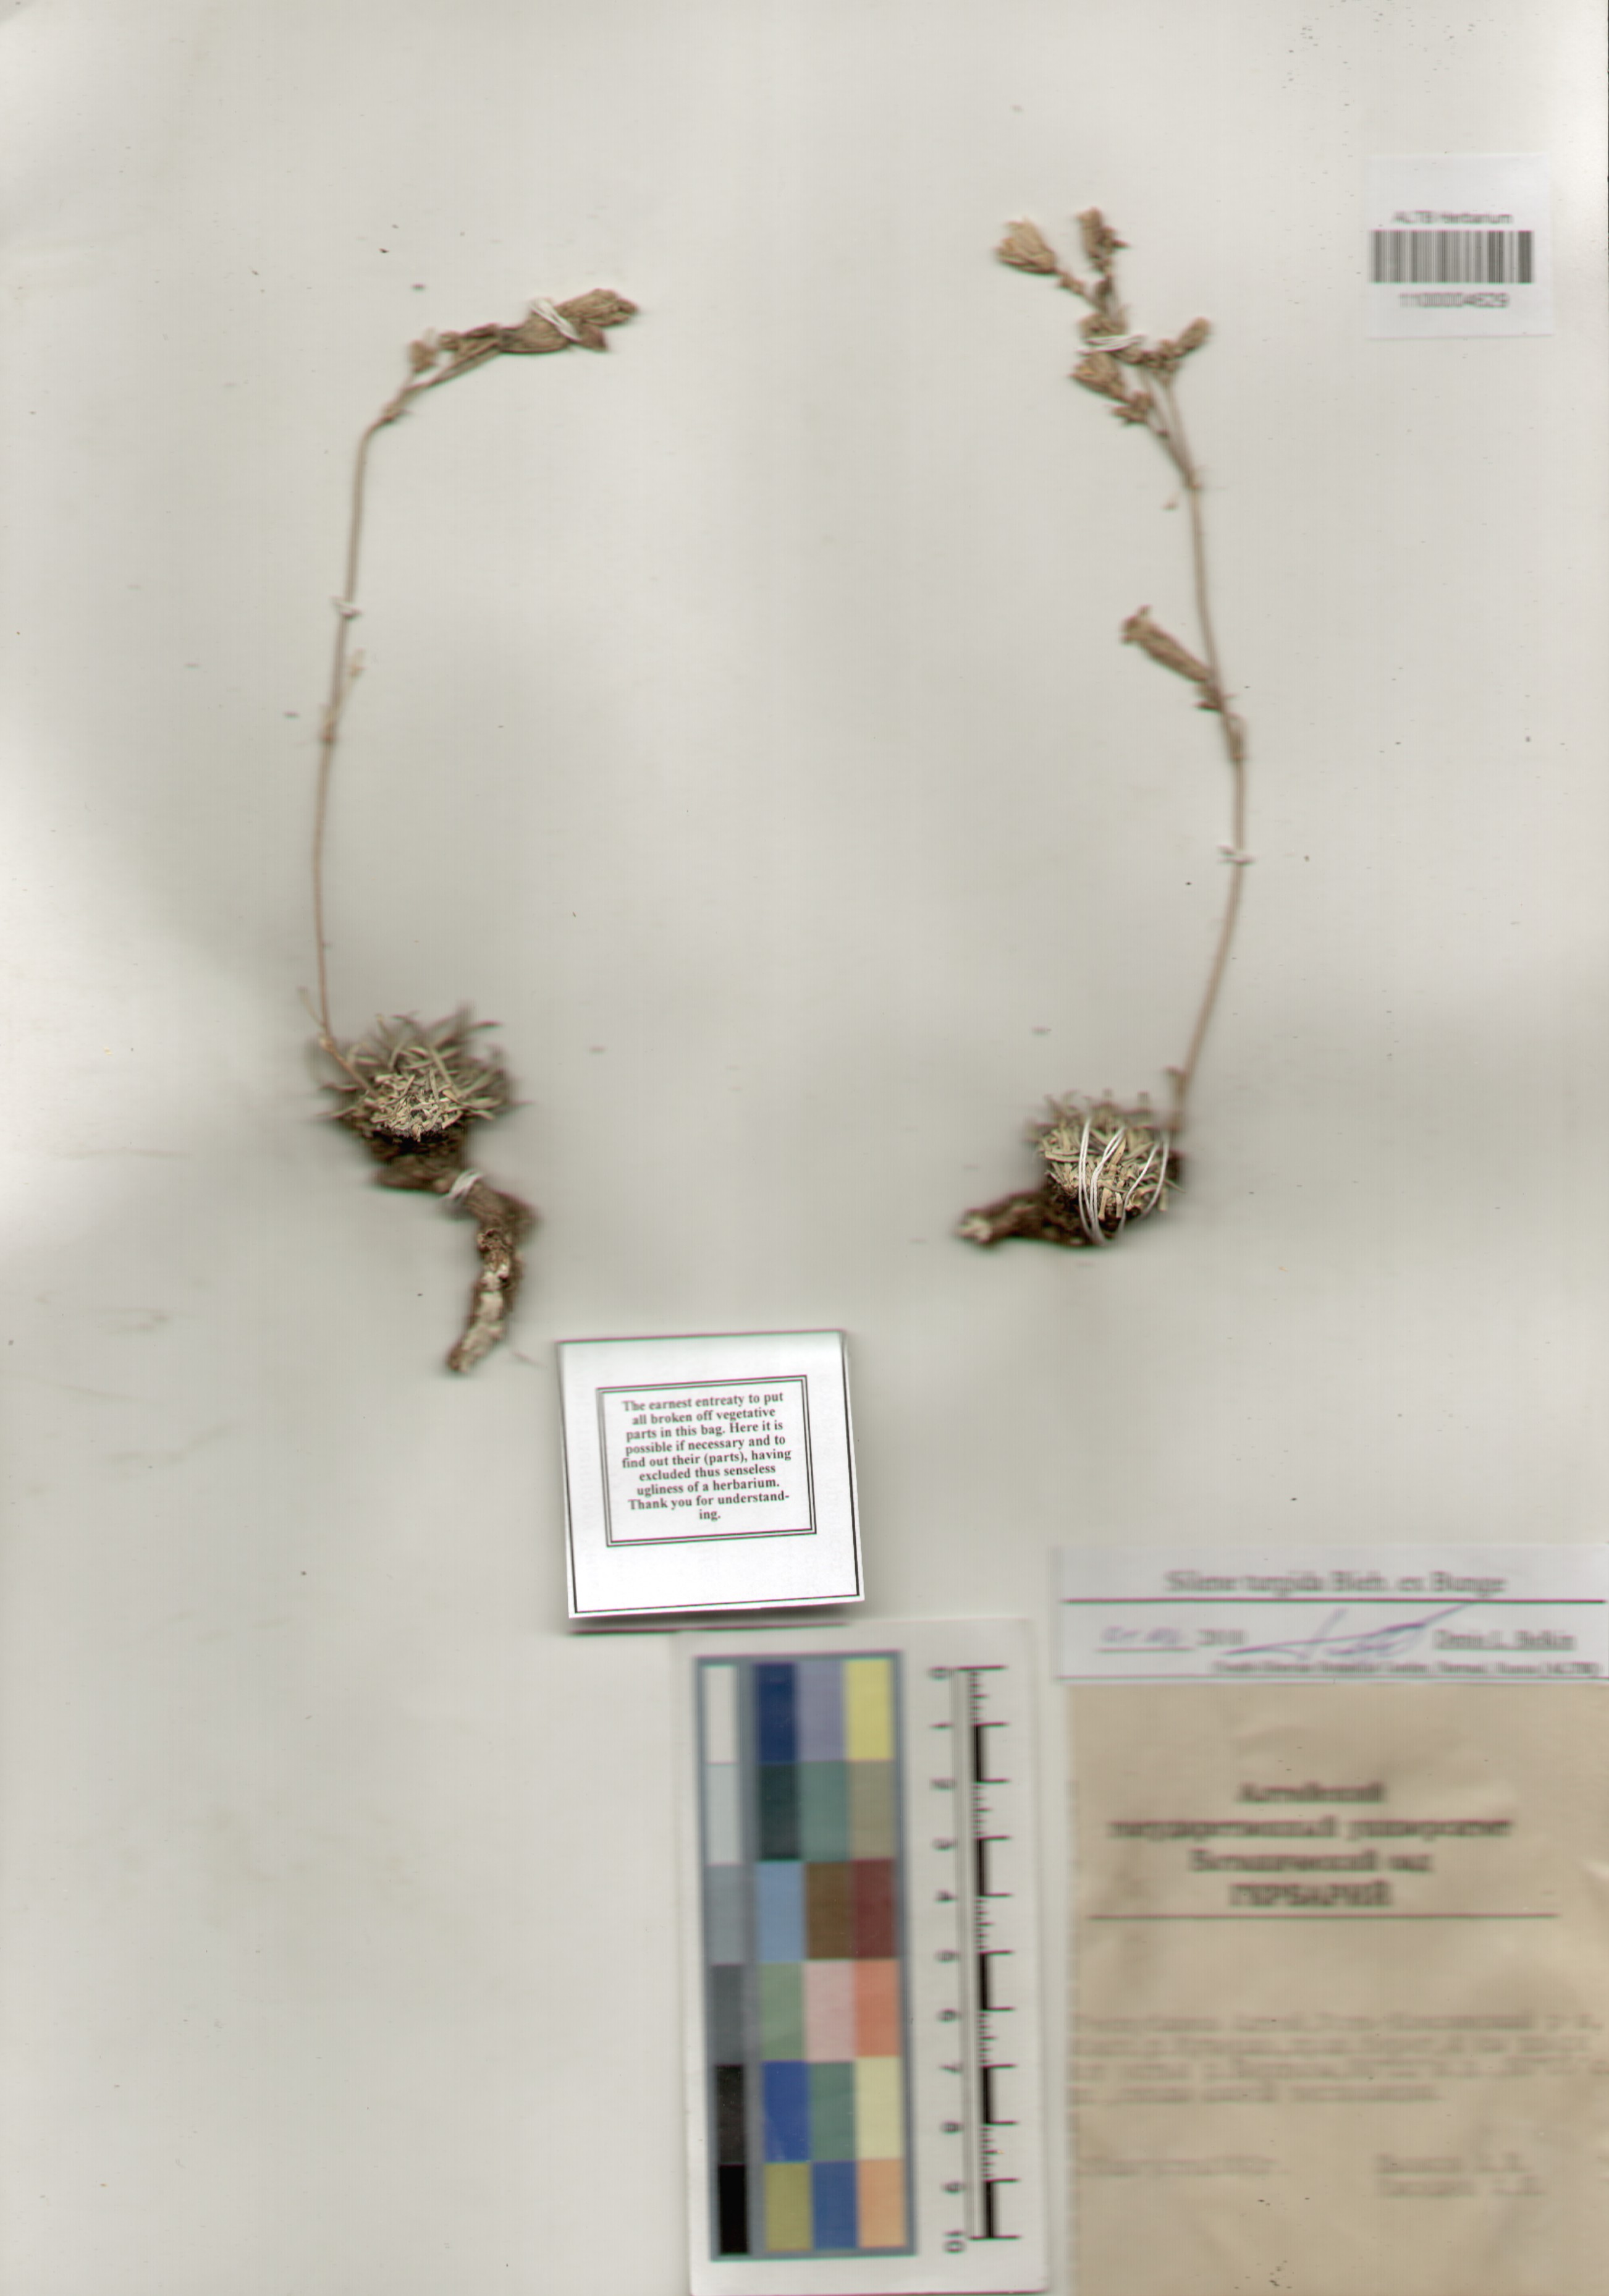 Caryophyllaceae,Silene turgida Bieb. ex. Bunge